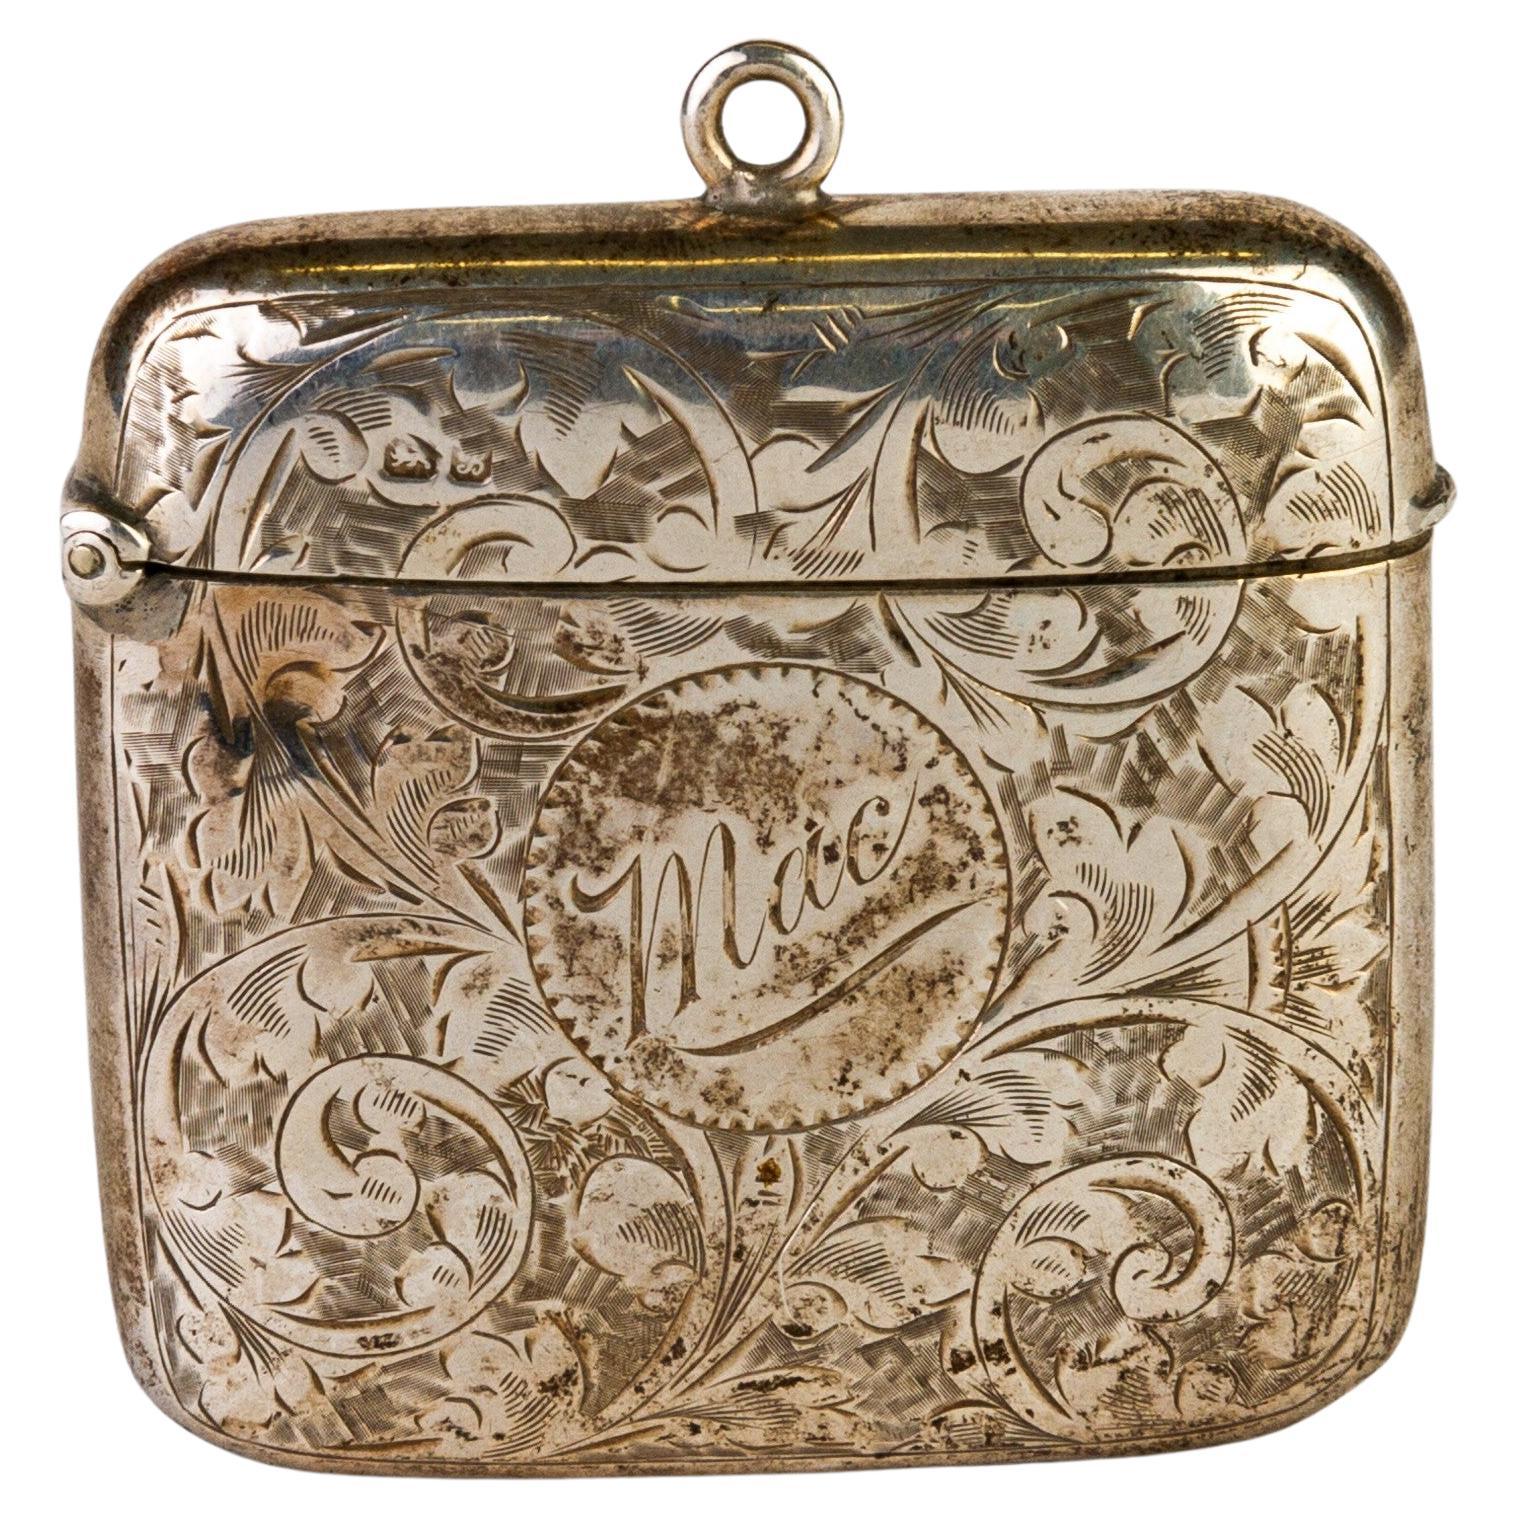 English Silver Engraved Chester Hallmarked Vesta Case 